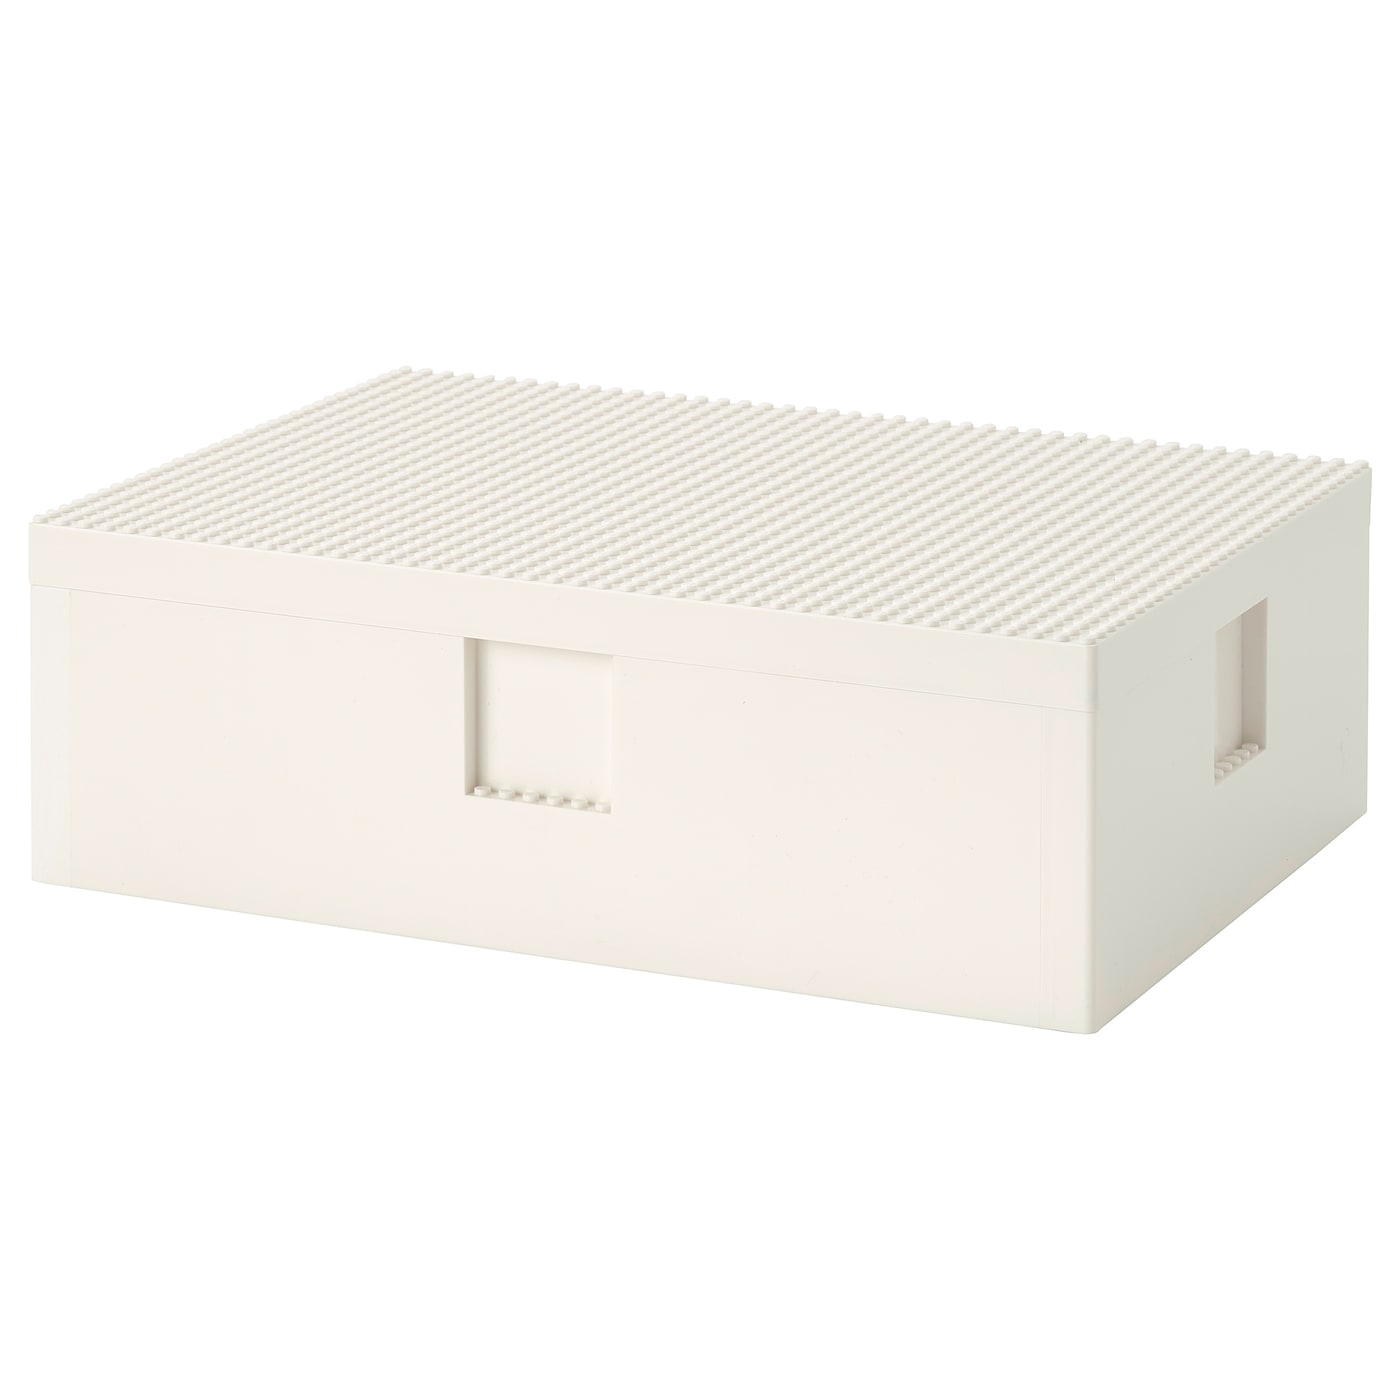 BYGGLEK LEGO коробка с крышкой, 35x26x12 см IKEA